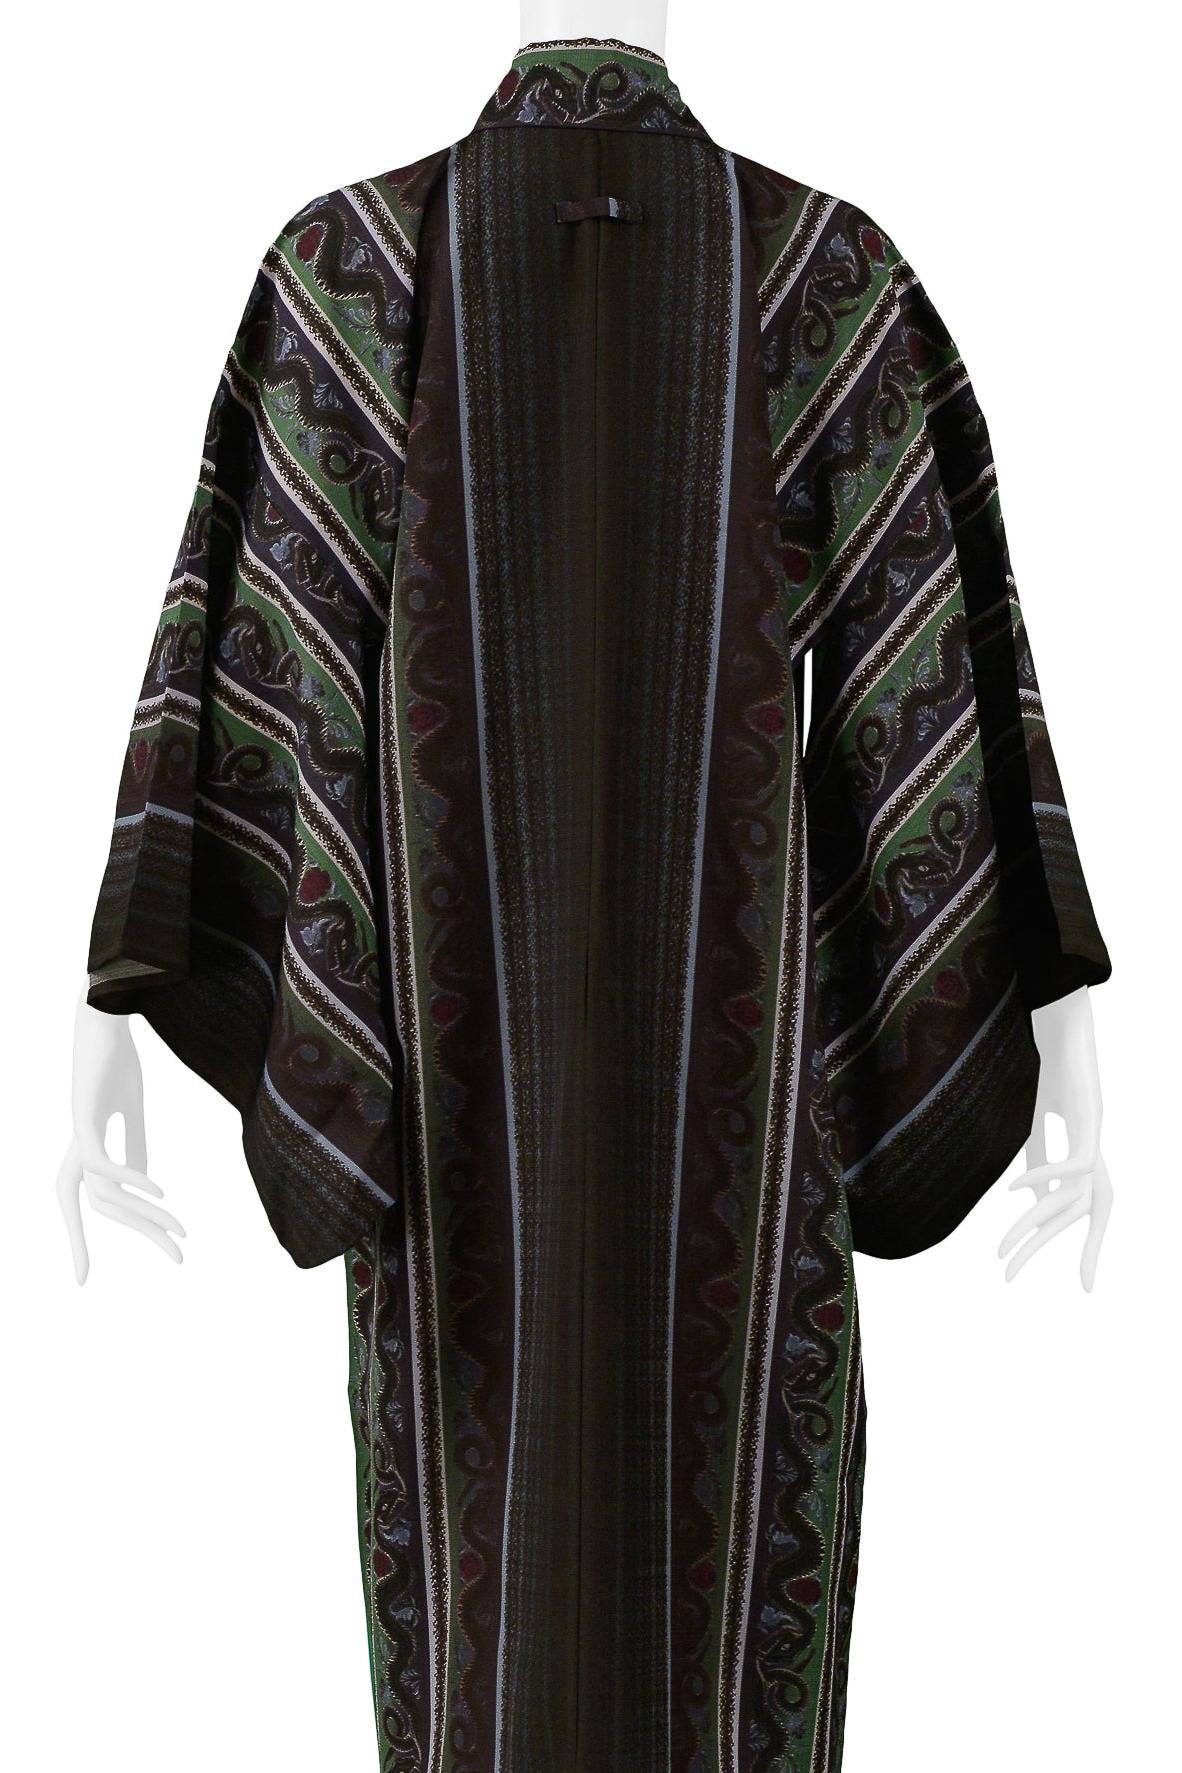 Jean Paul Gaultier Forest & Serpent Kimono Robe 2002 3